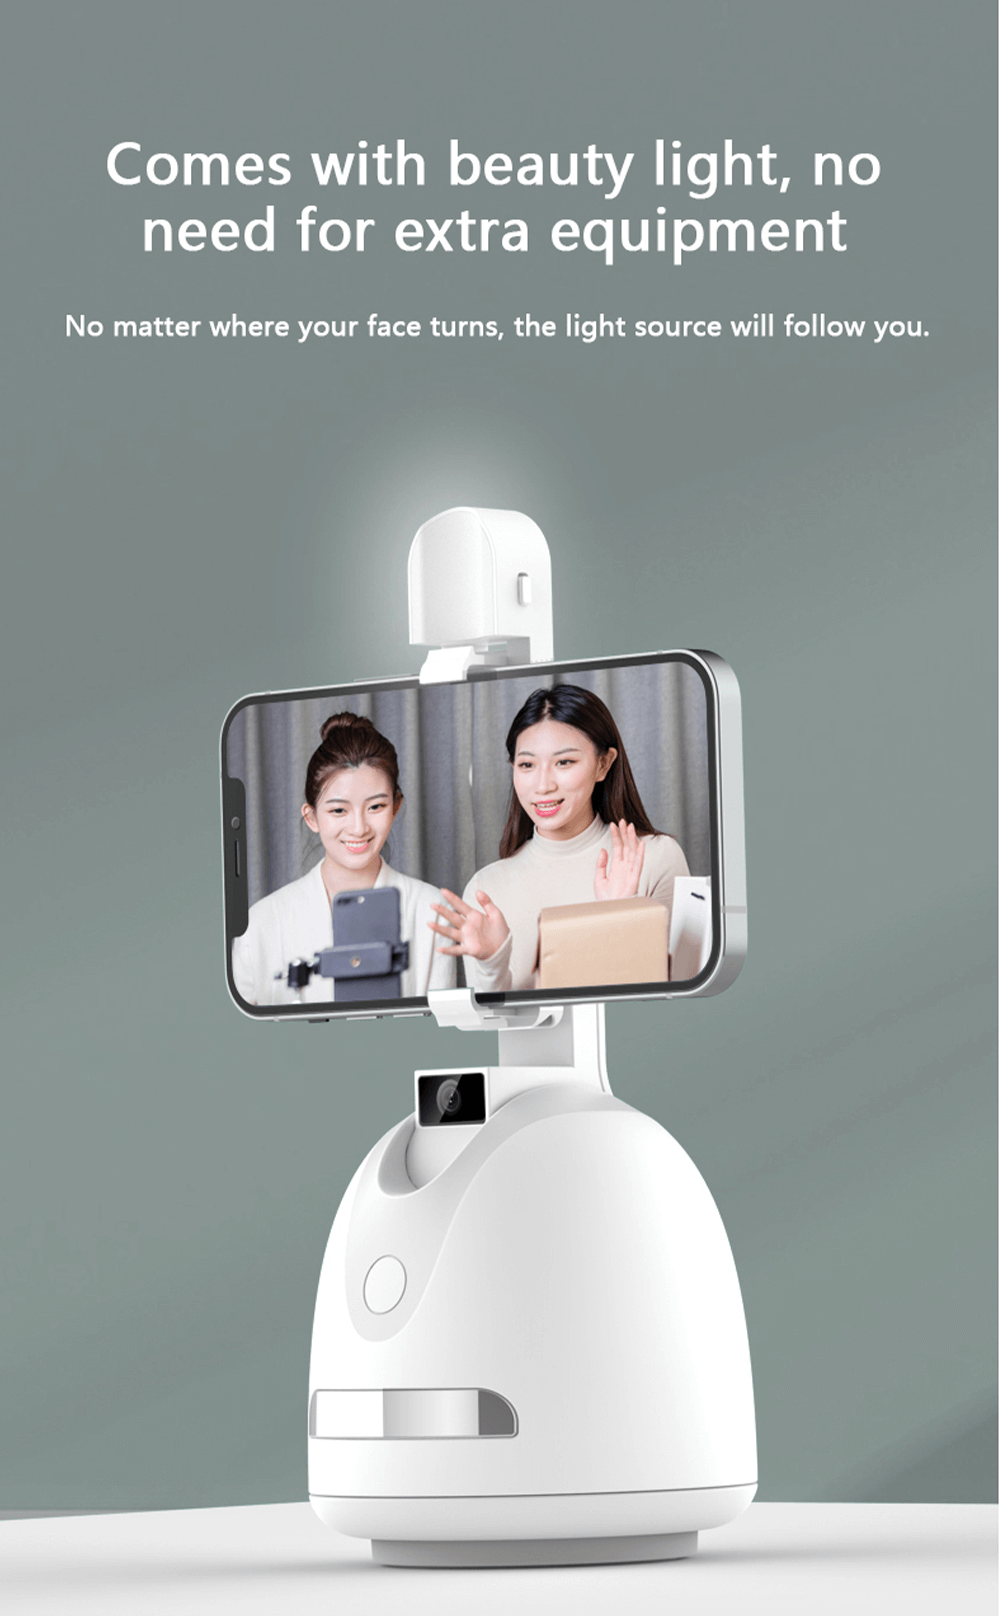 360° Yüz Takip Akıllı Telefon Vlog Tutucu-Shenzhen Shengye Technology Co.,Ltd